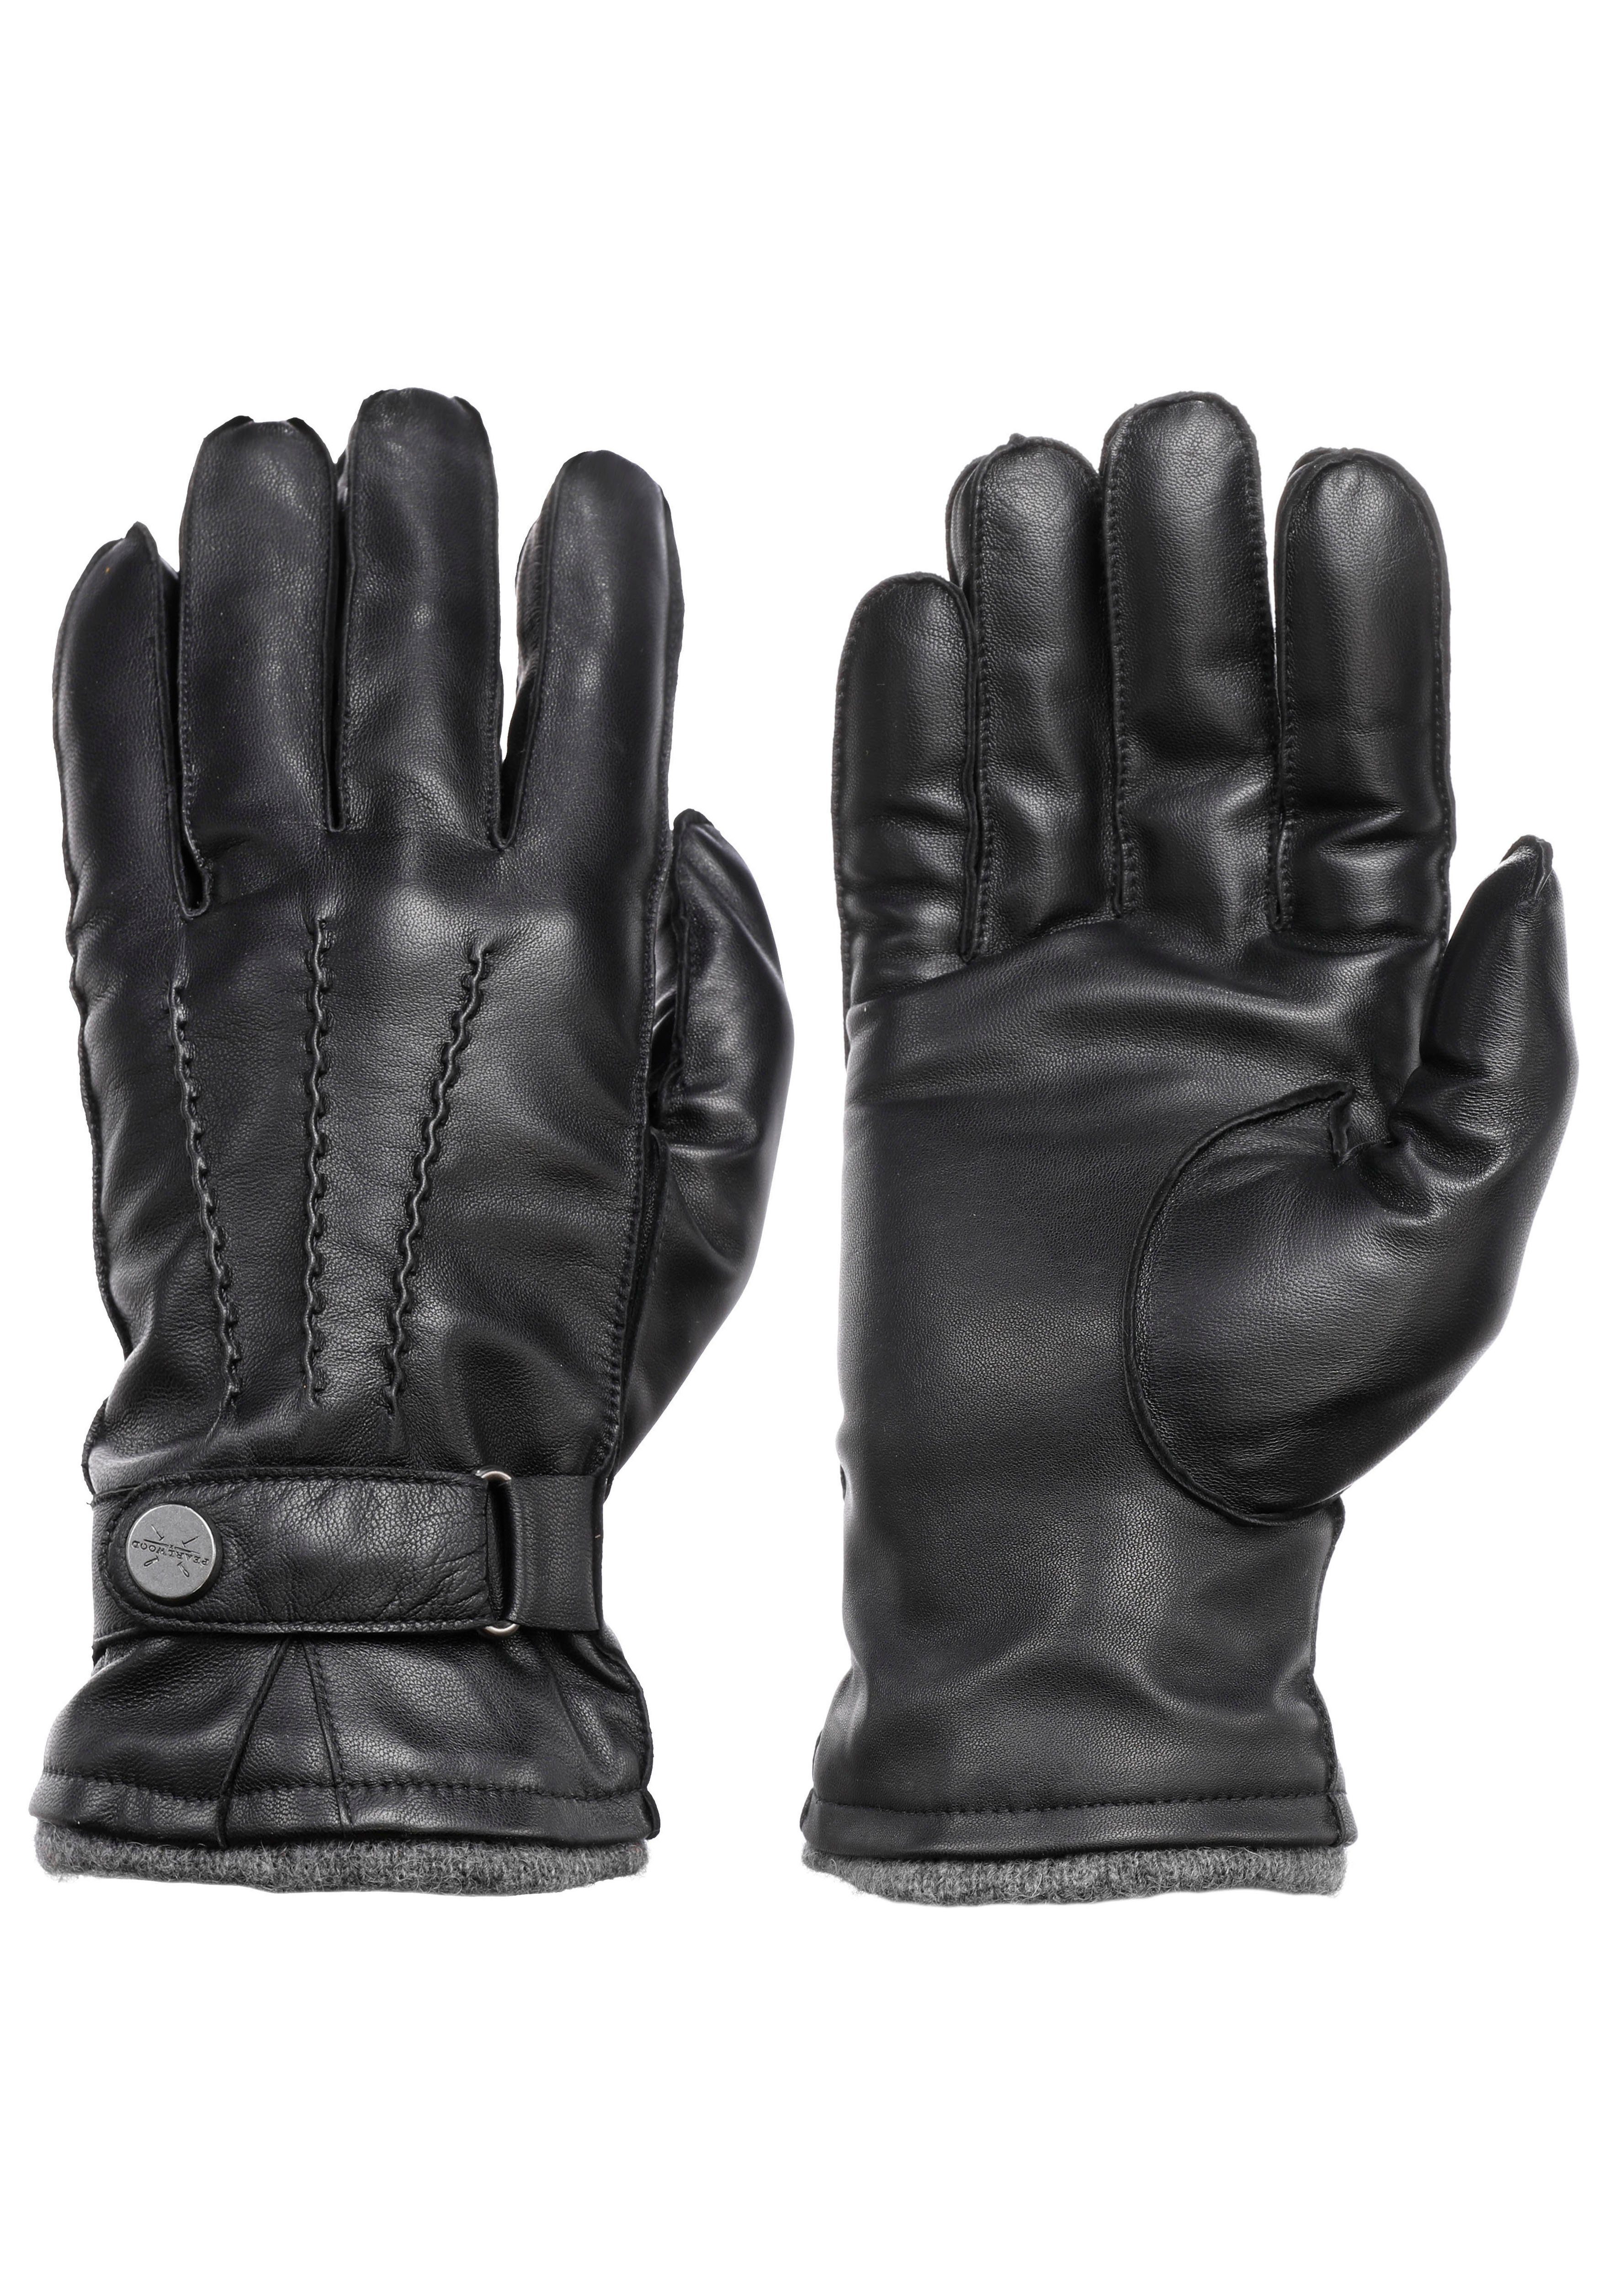 PEARLWOOD Lederhandschuhe Mike Touchscreen proofed - 10 Finger System | Handschuhe